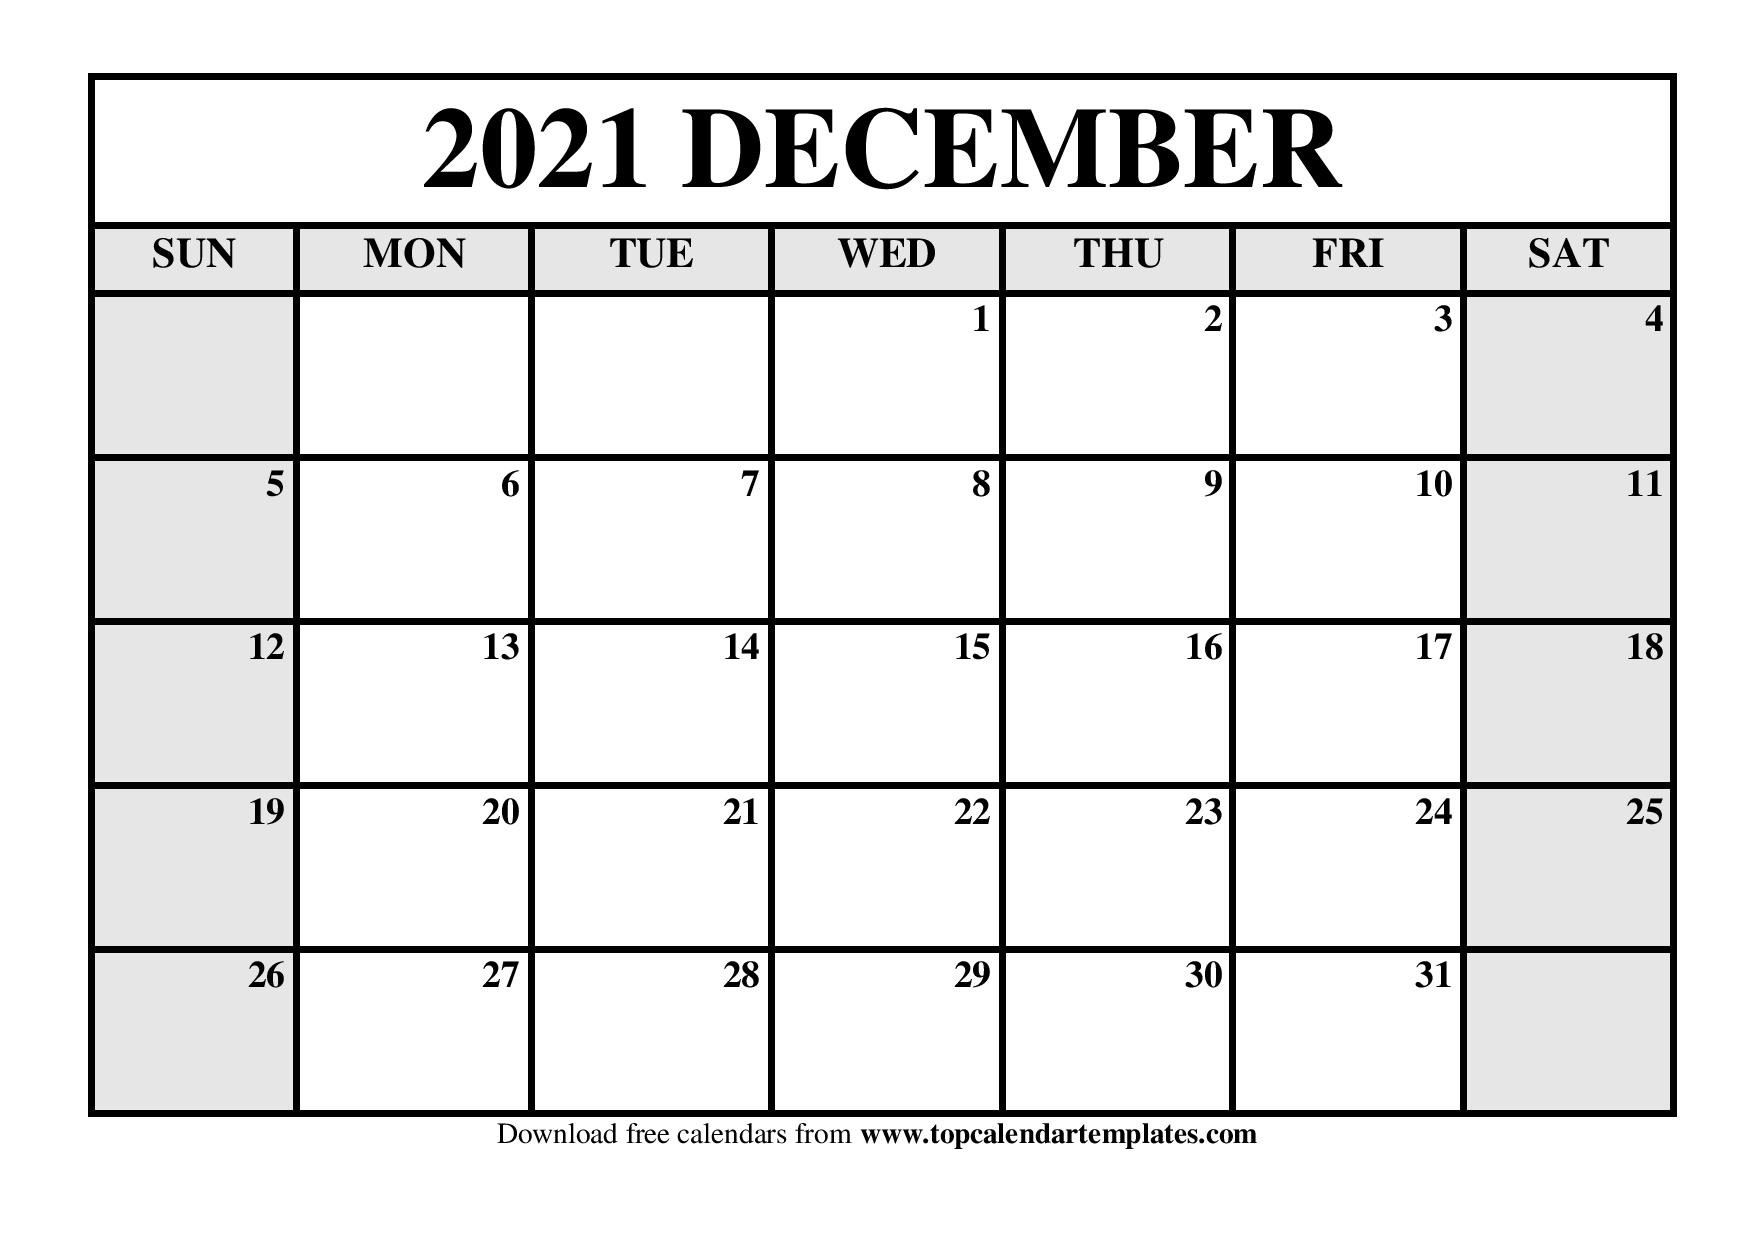 December 2021 Printable Calendar In Pdf Format-Free Printable Dec 2021 Calendar